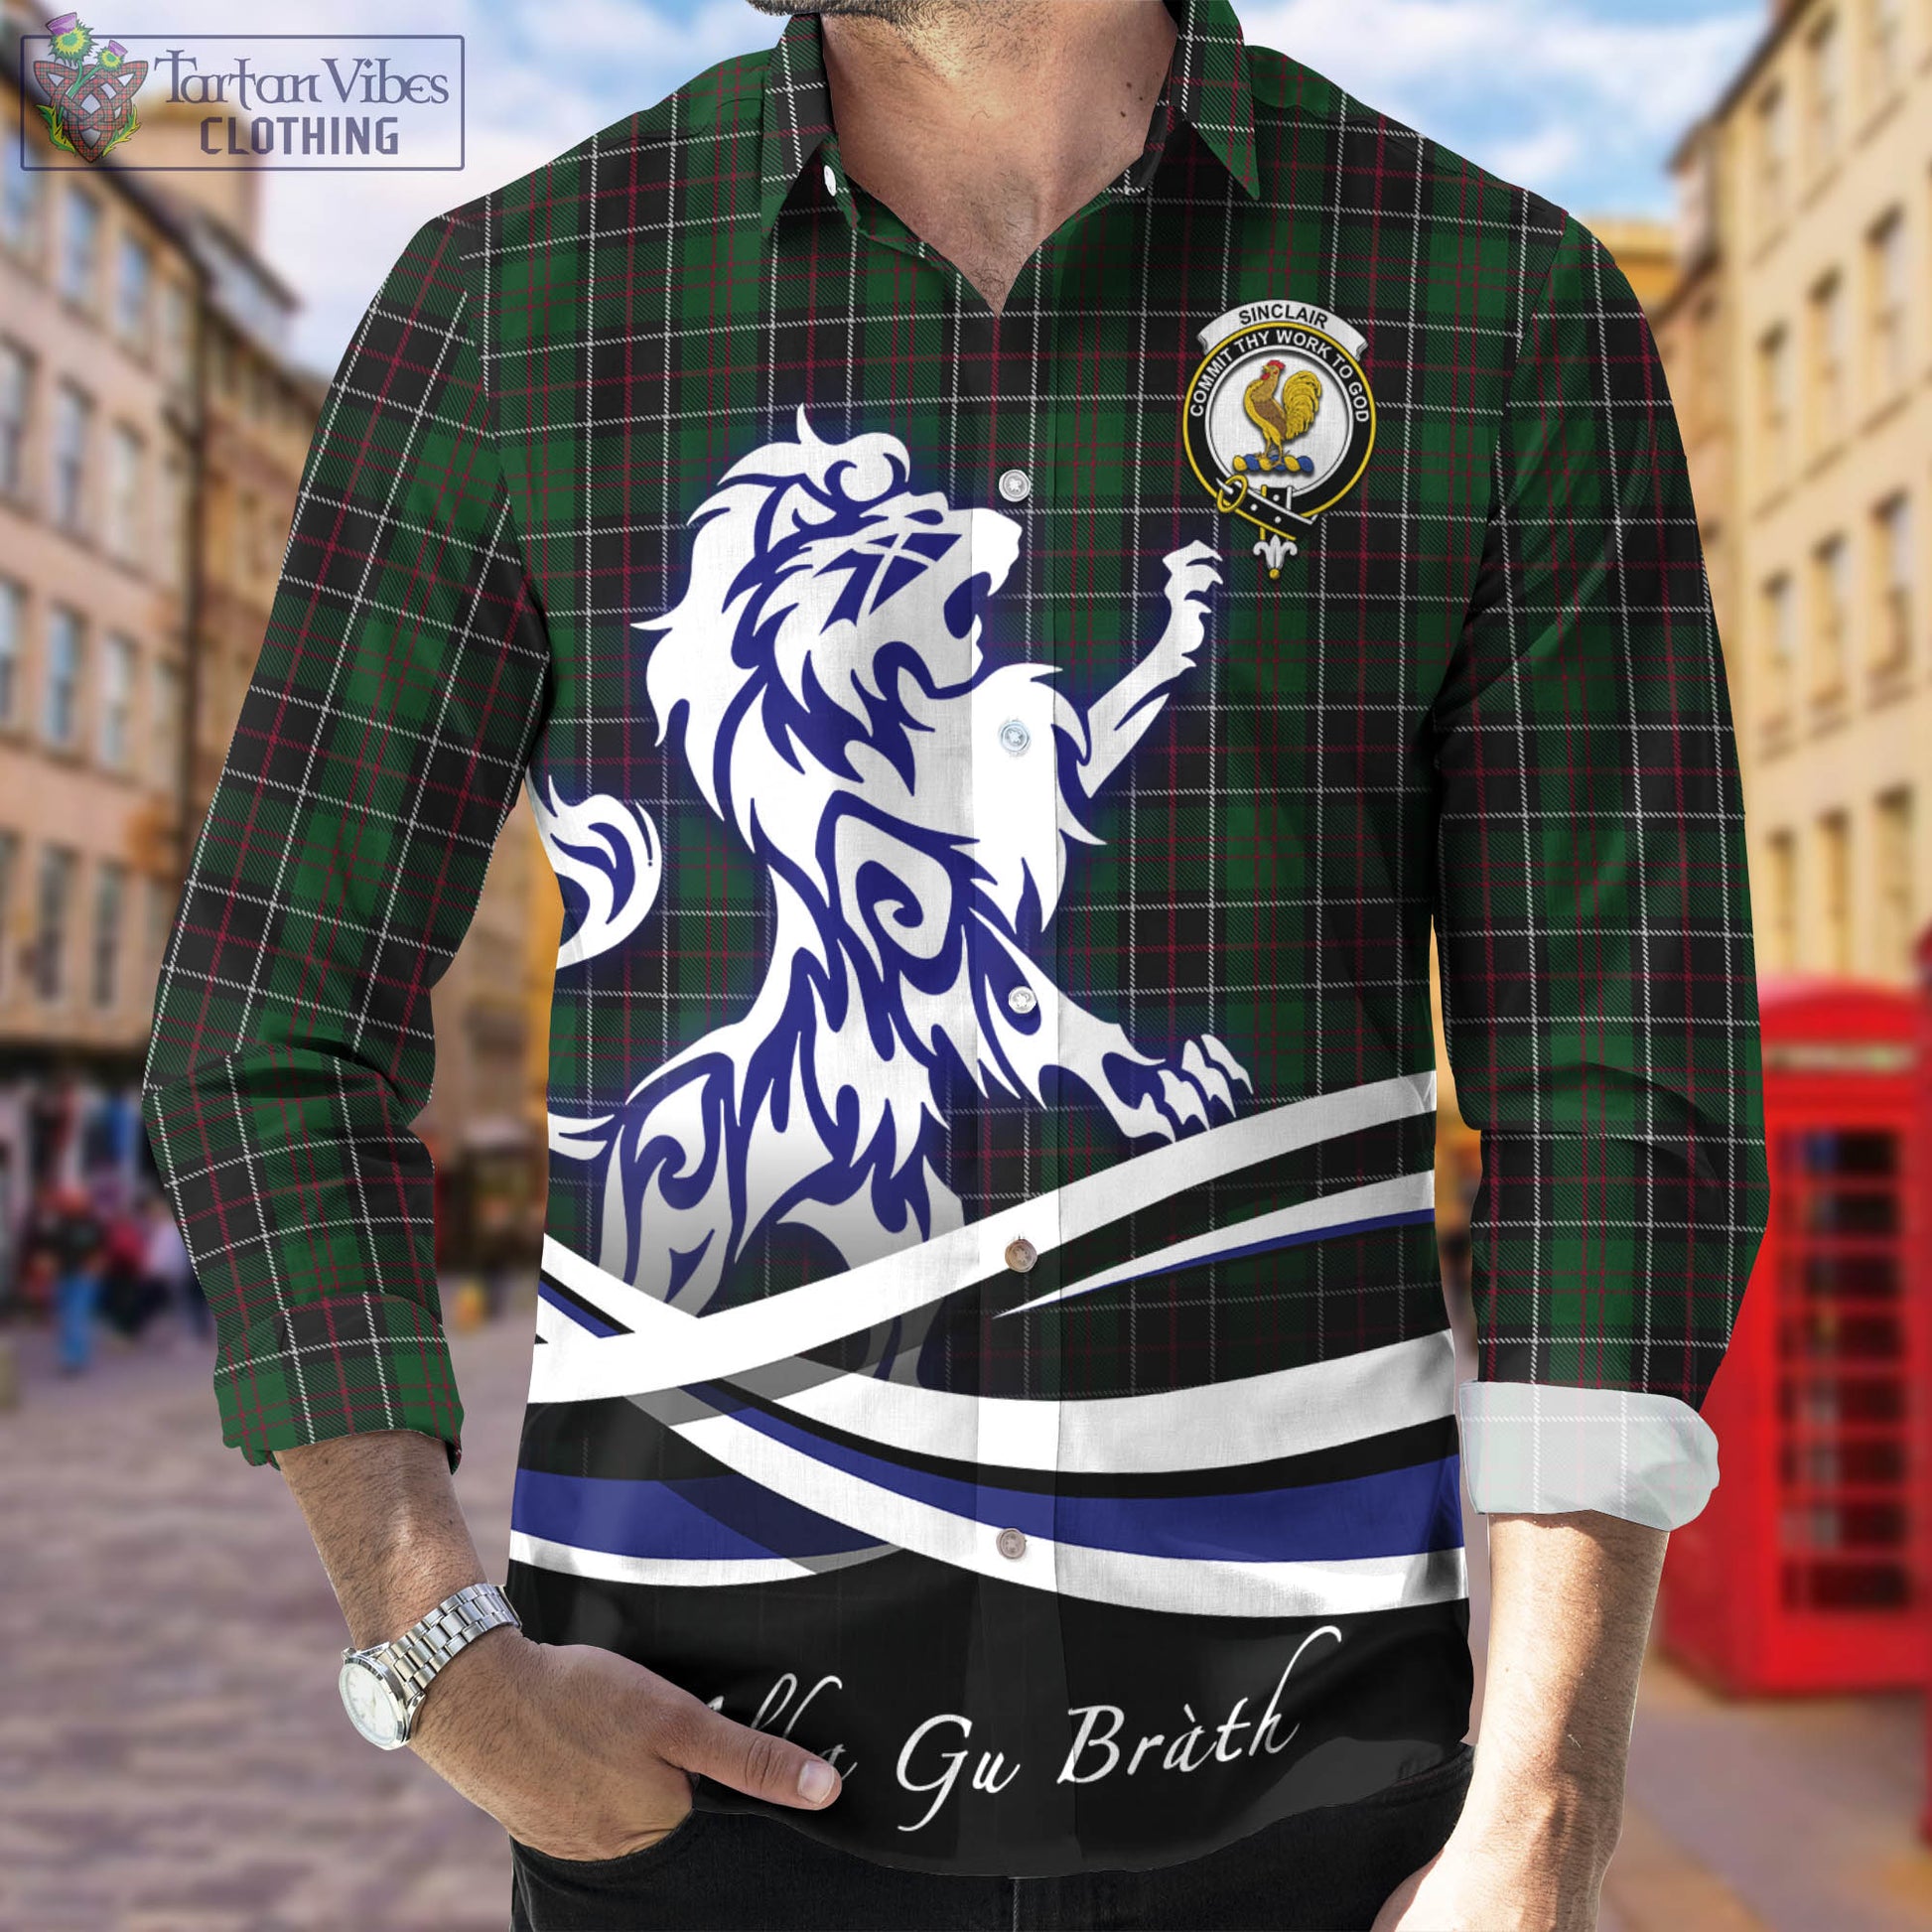 sinclair-hunting-tartan-long-sleeve-button-up-shirt-with-alba-gu-brath-regal-lion-emblem